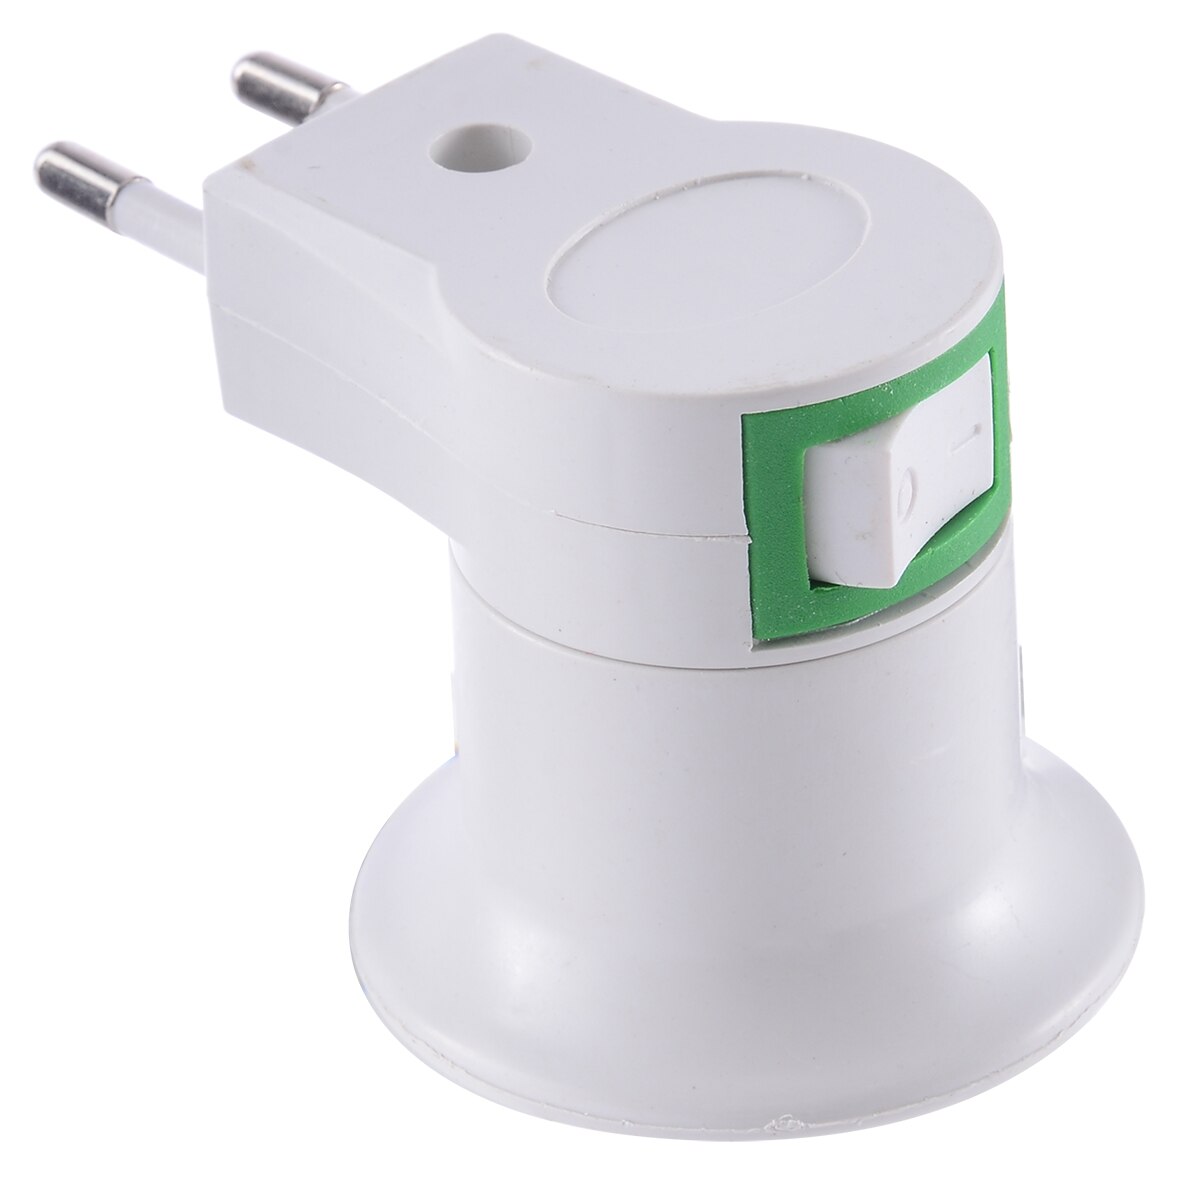 1 Pc Wit Gloeilamp Houder Eu Plug Adapter E27 Led Licht Socket Converter Met On/Off Knop Houder